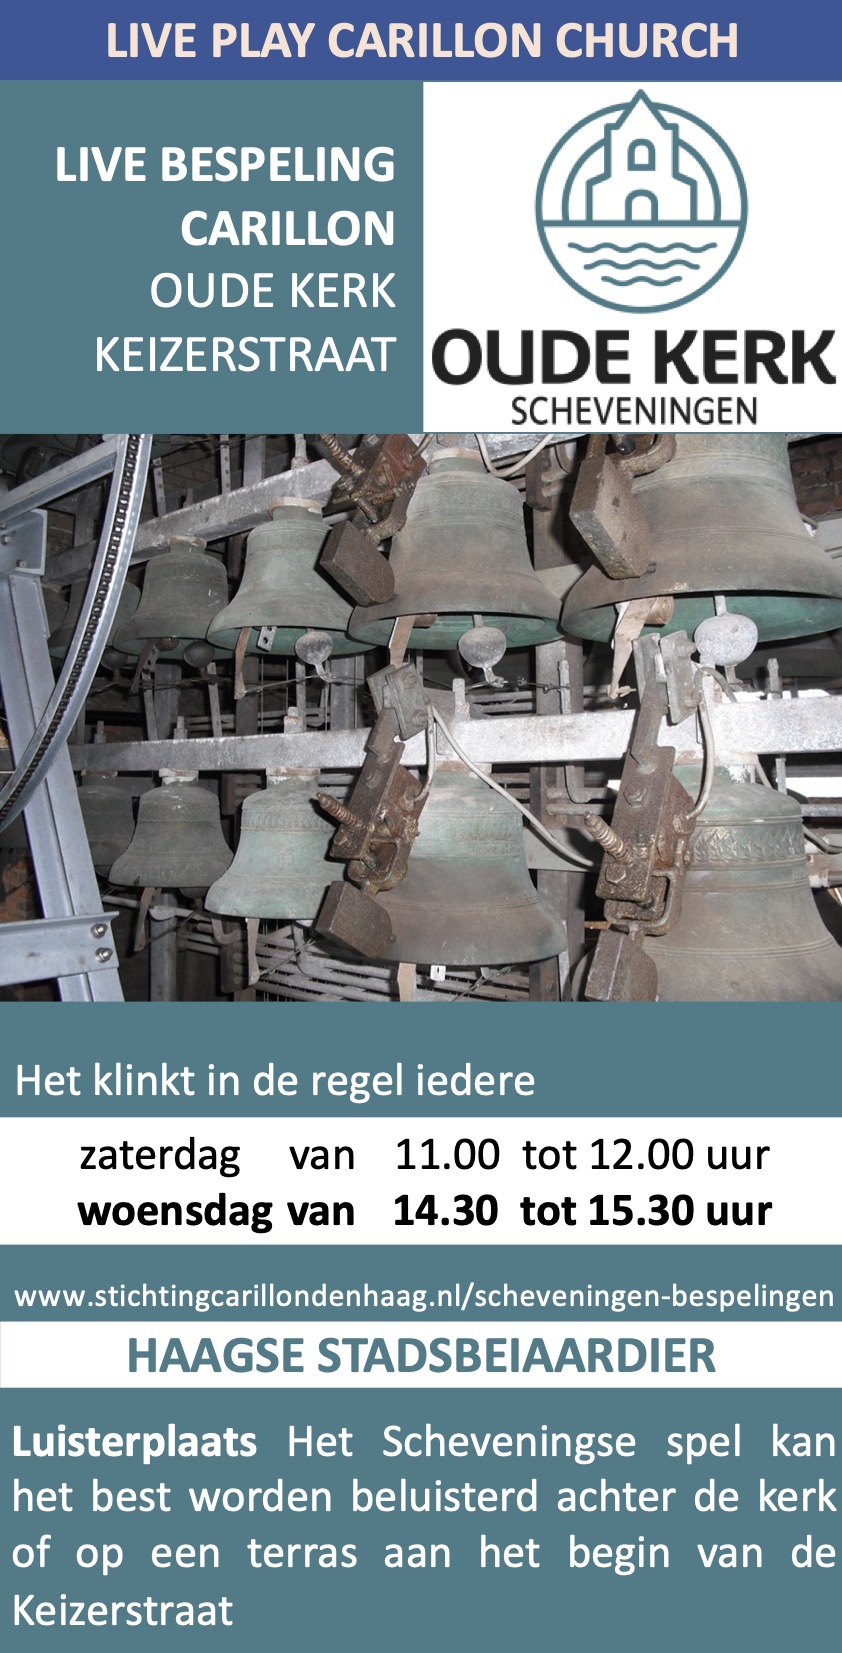 Live bespeling Carillon Oude Kerk Scheveningen op woensdag